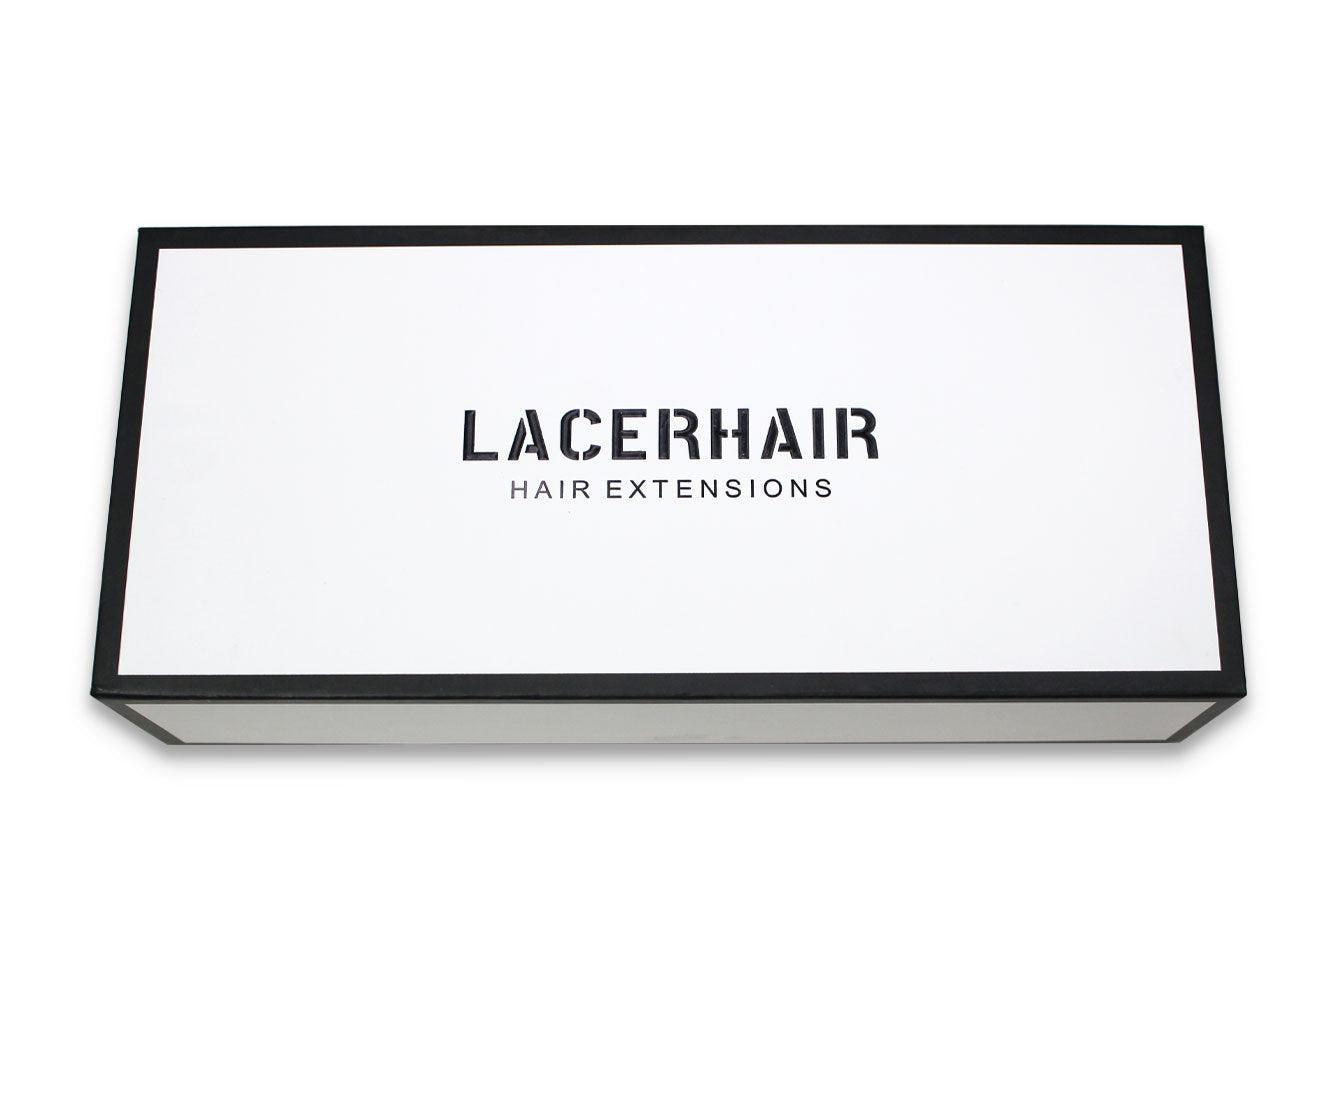 Tape in Hair Extensions #4 Chocolate Brown - lacerhair